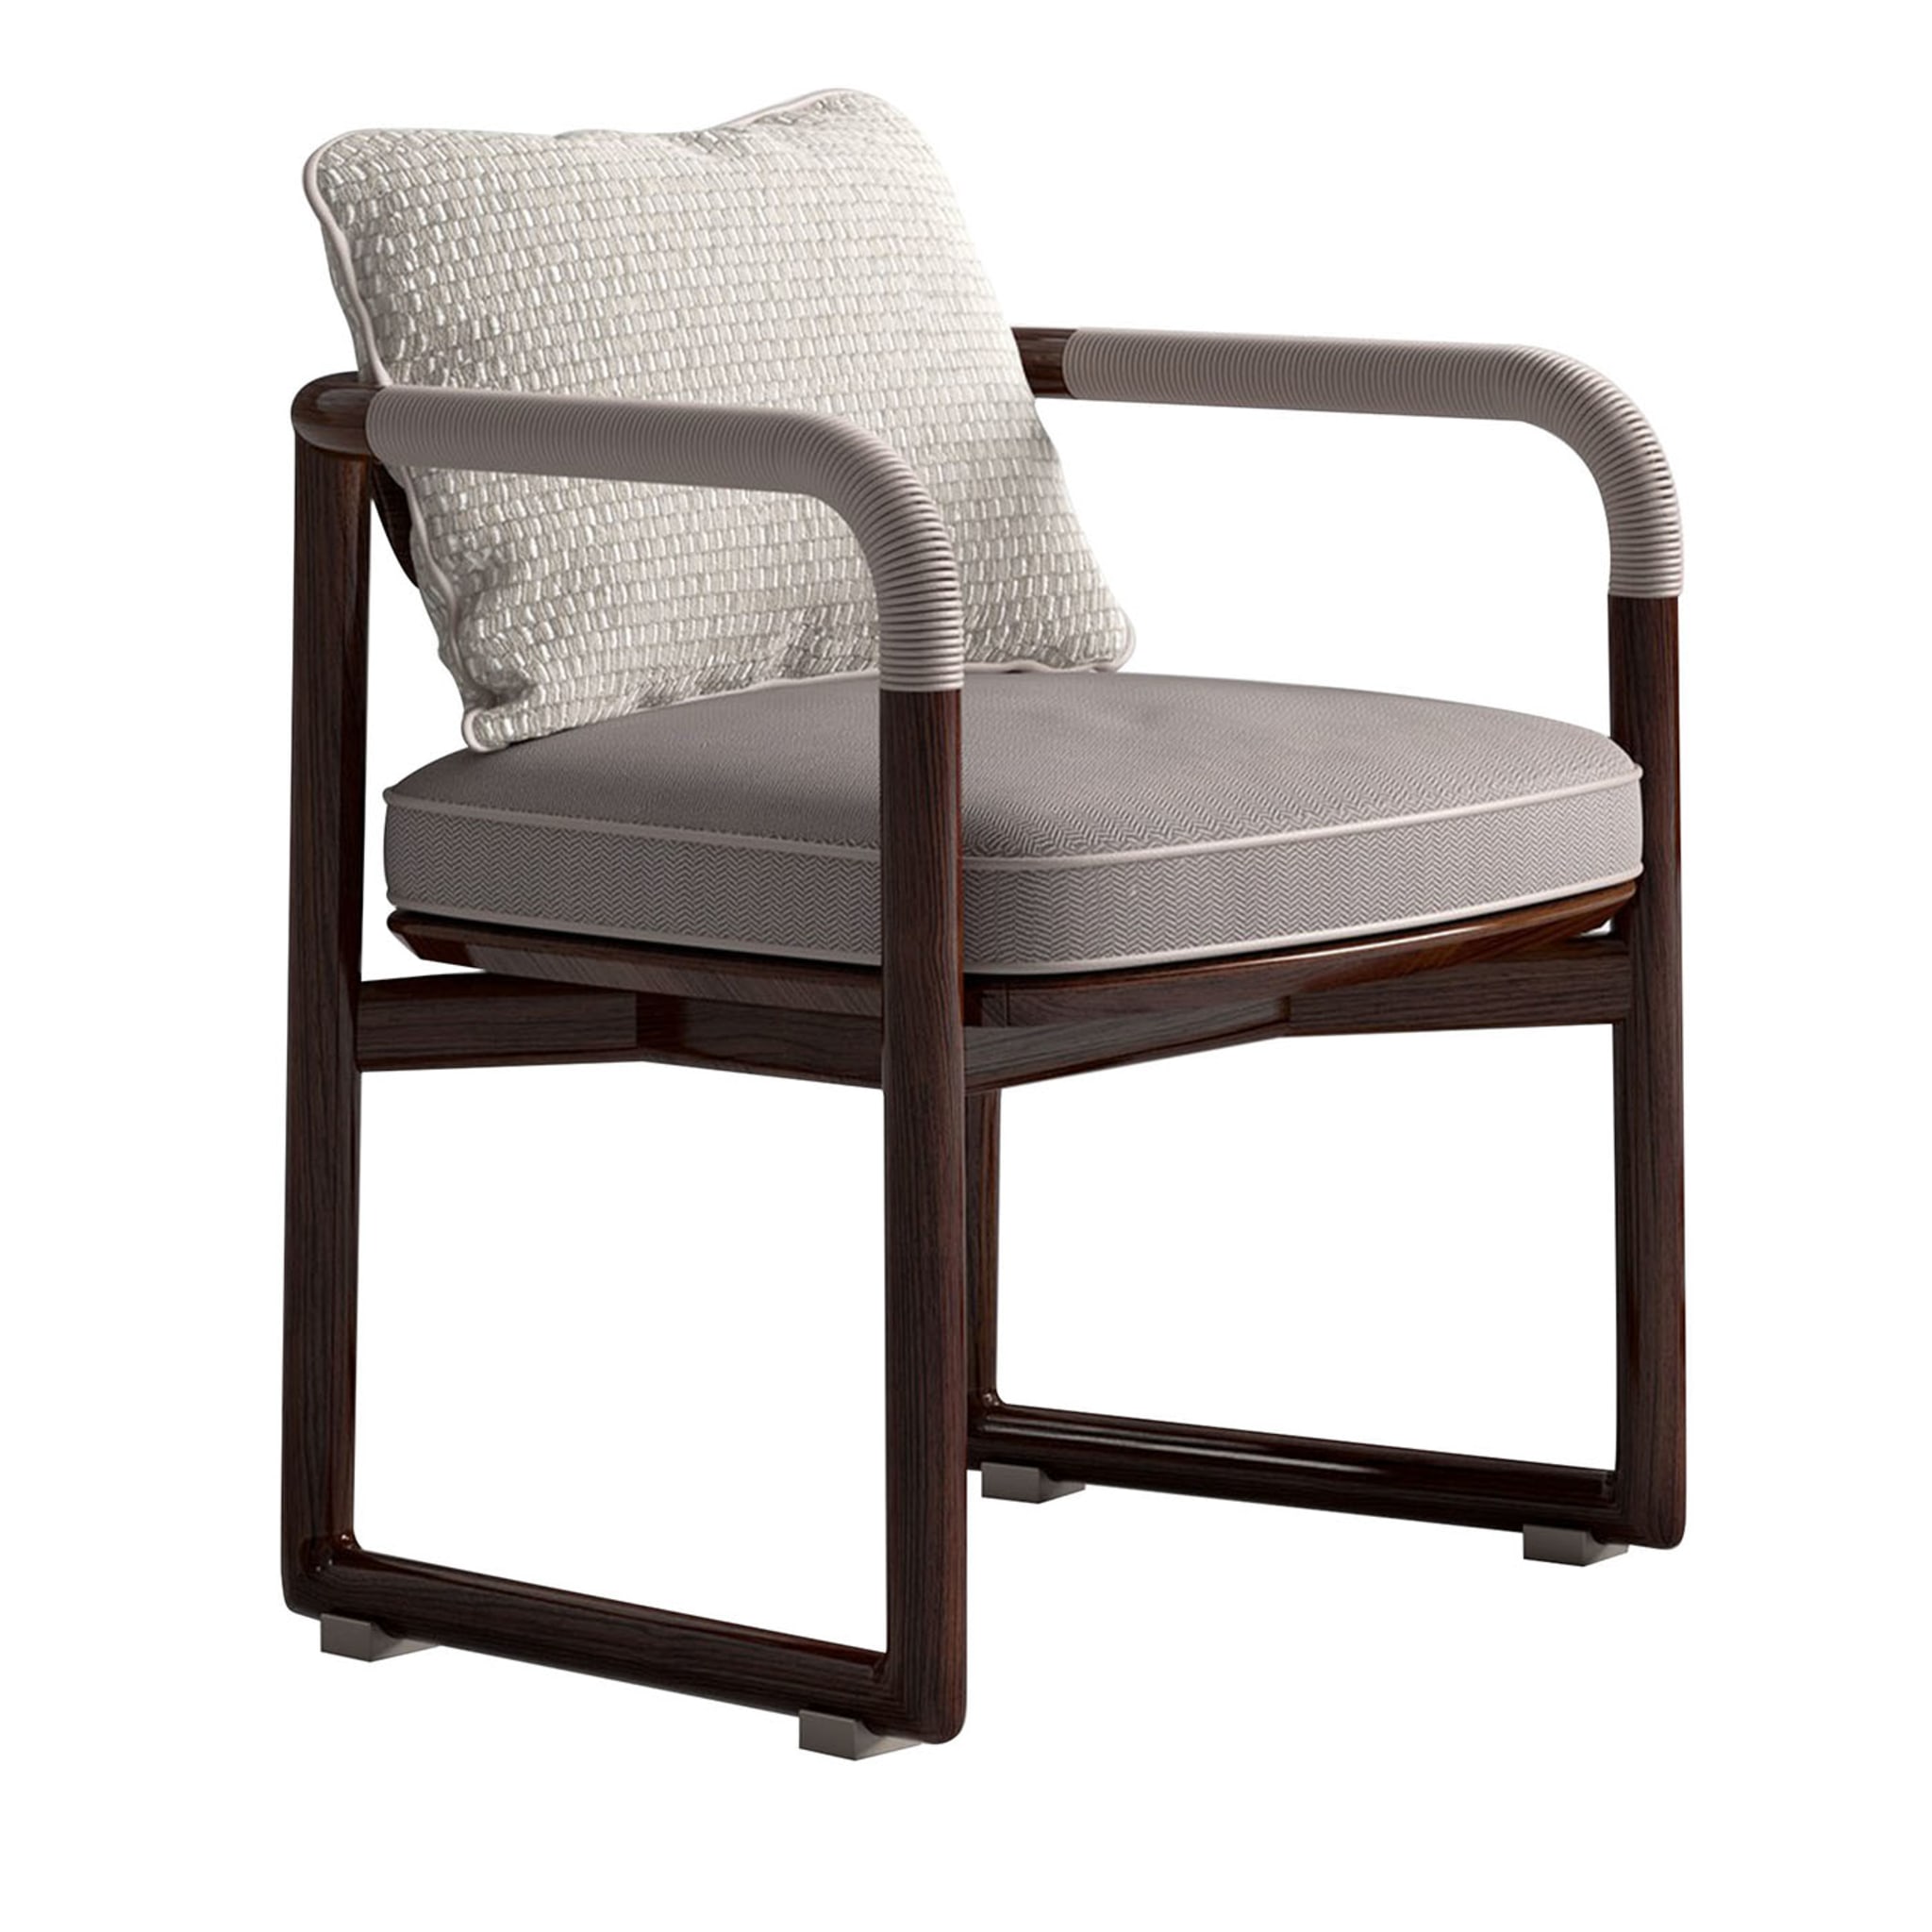 Wood Beige Chair - Main view